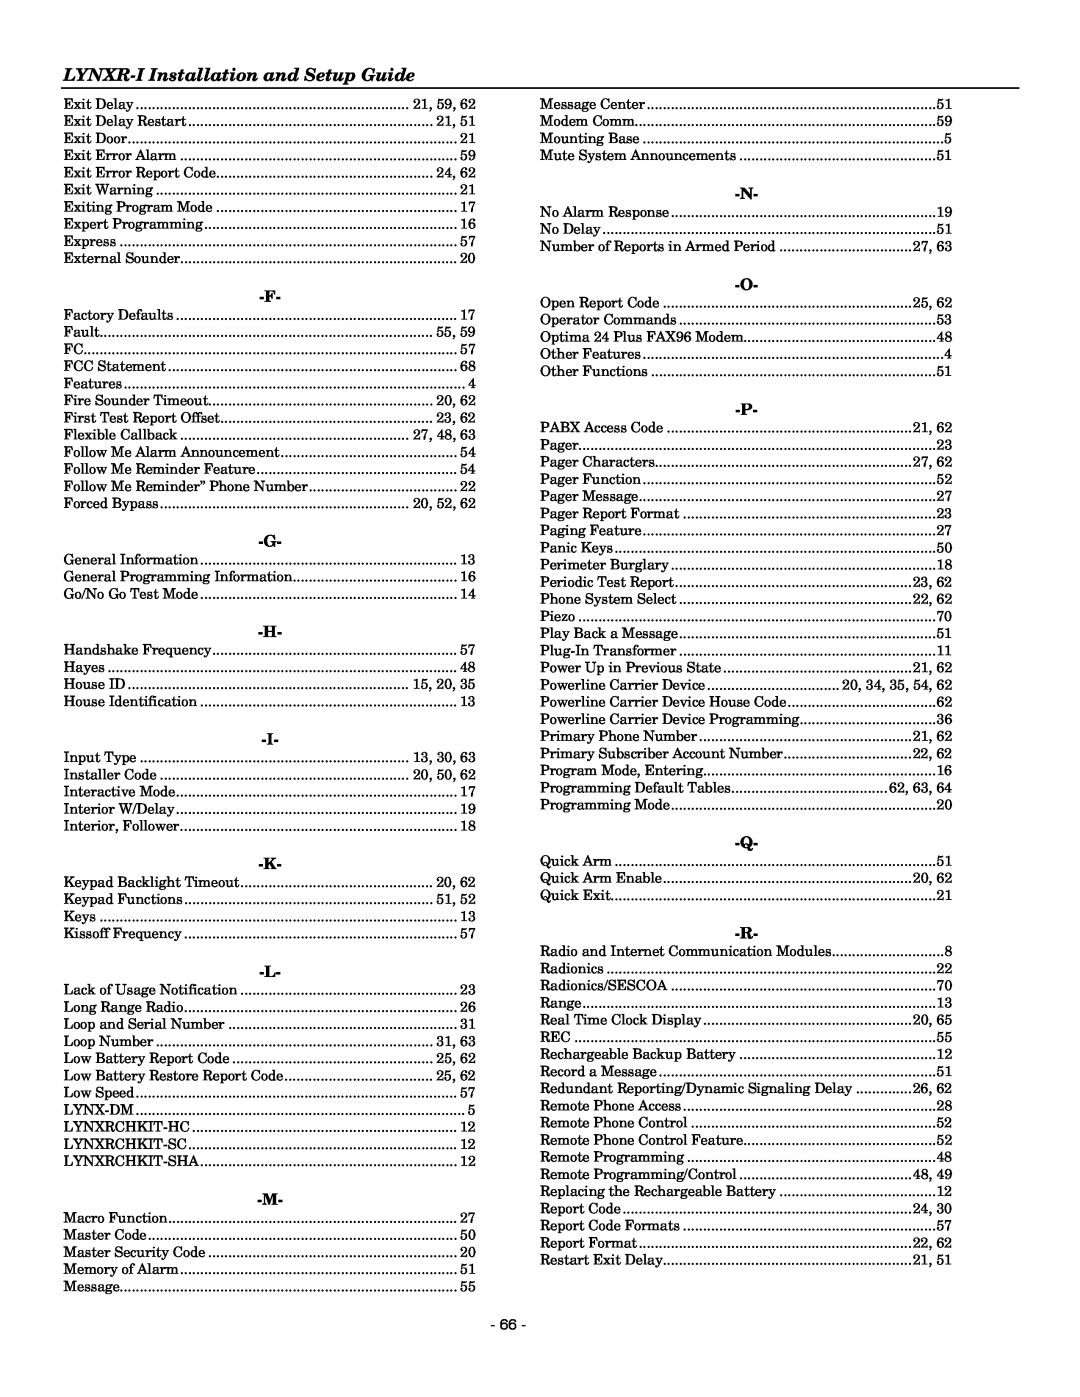 Honeywell K14114 3/06 Rev.B setup guide LYNXR-IInstallation and Setup Guide 